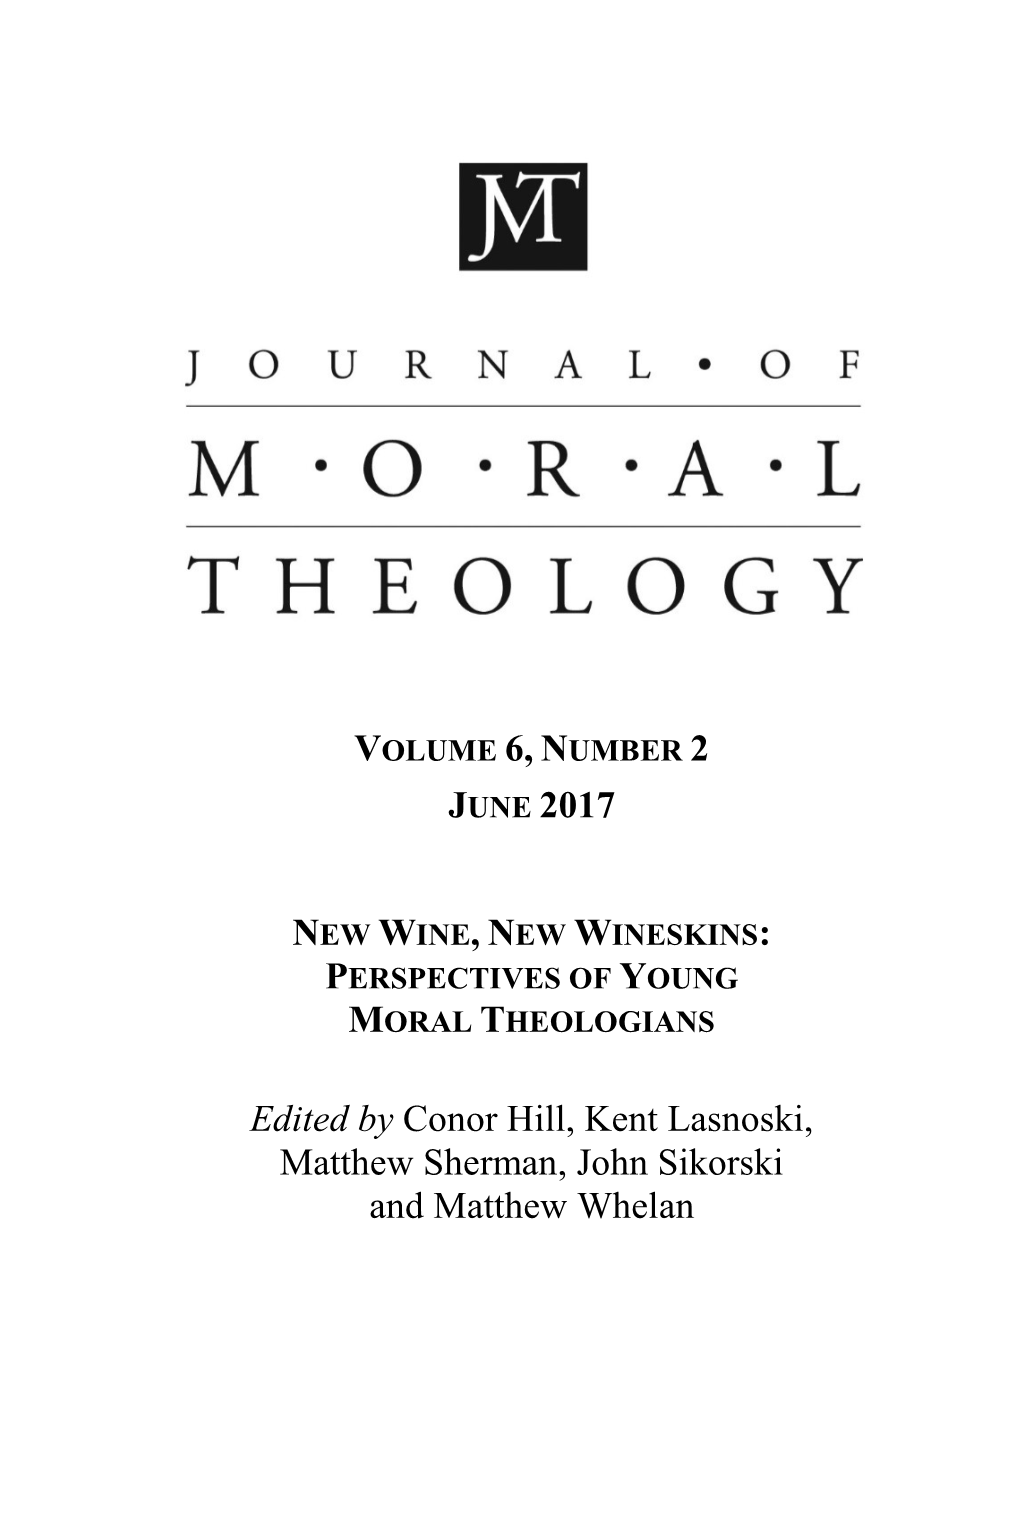 Edited by Conor Hill, Kent Lasnoski, Matthew Sherman, John Sikorski and Matthew Whelan